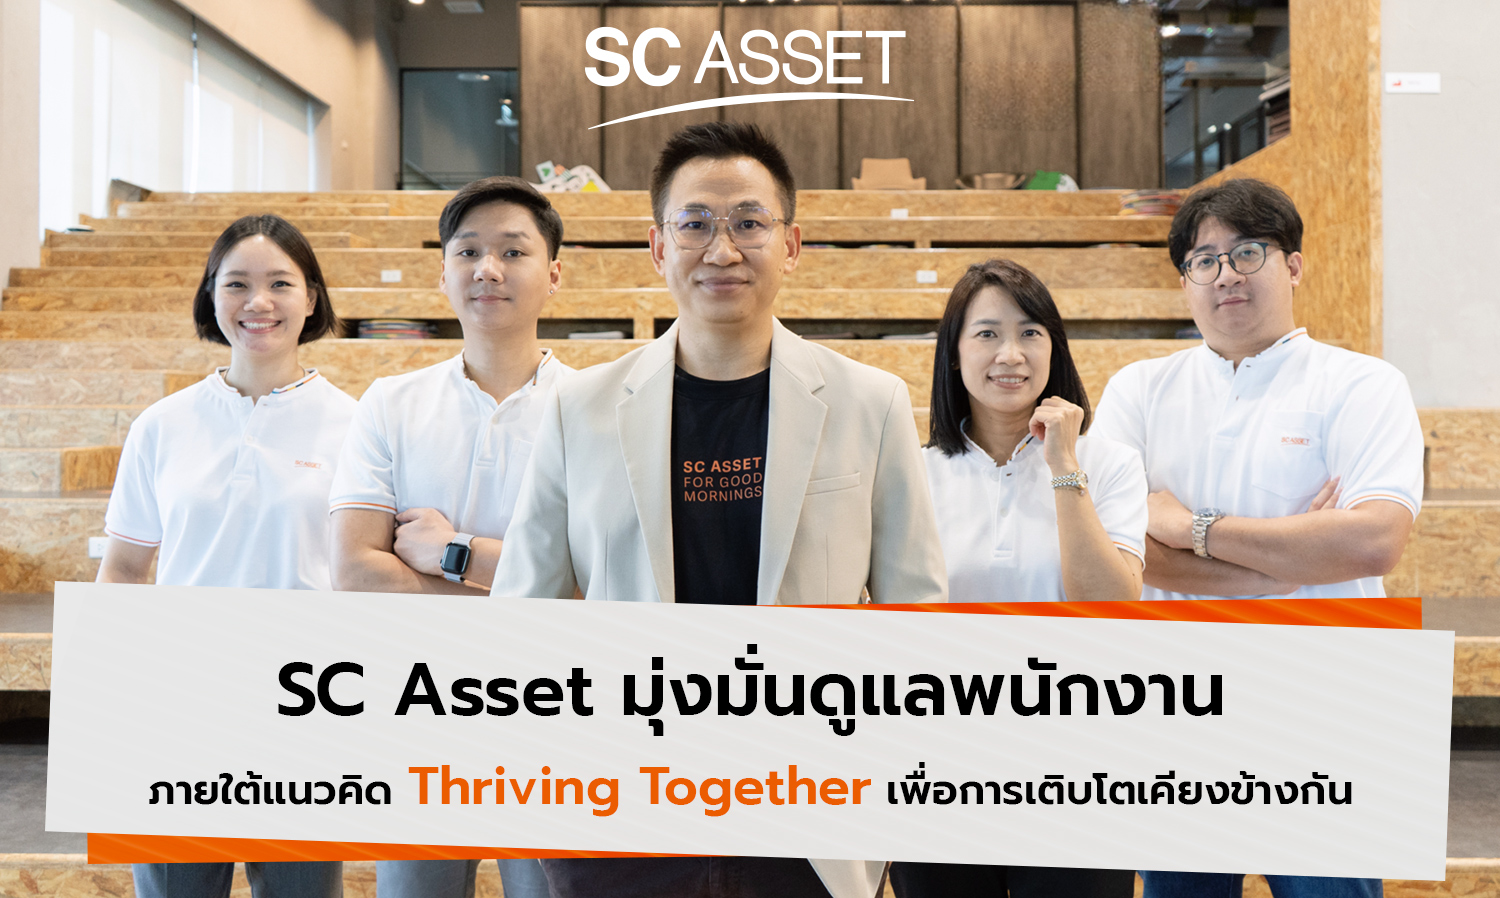 SC Asset มุ่งมั่นดูแลพนักงานภายใต้แนวคิด Thriving Together เพื่อการเติบโตเคียงข้างกัน